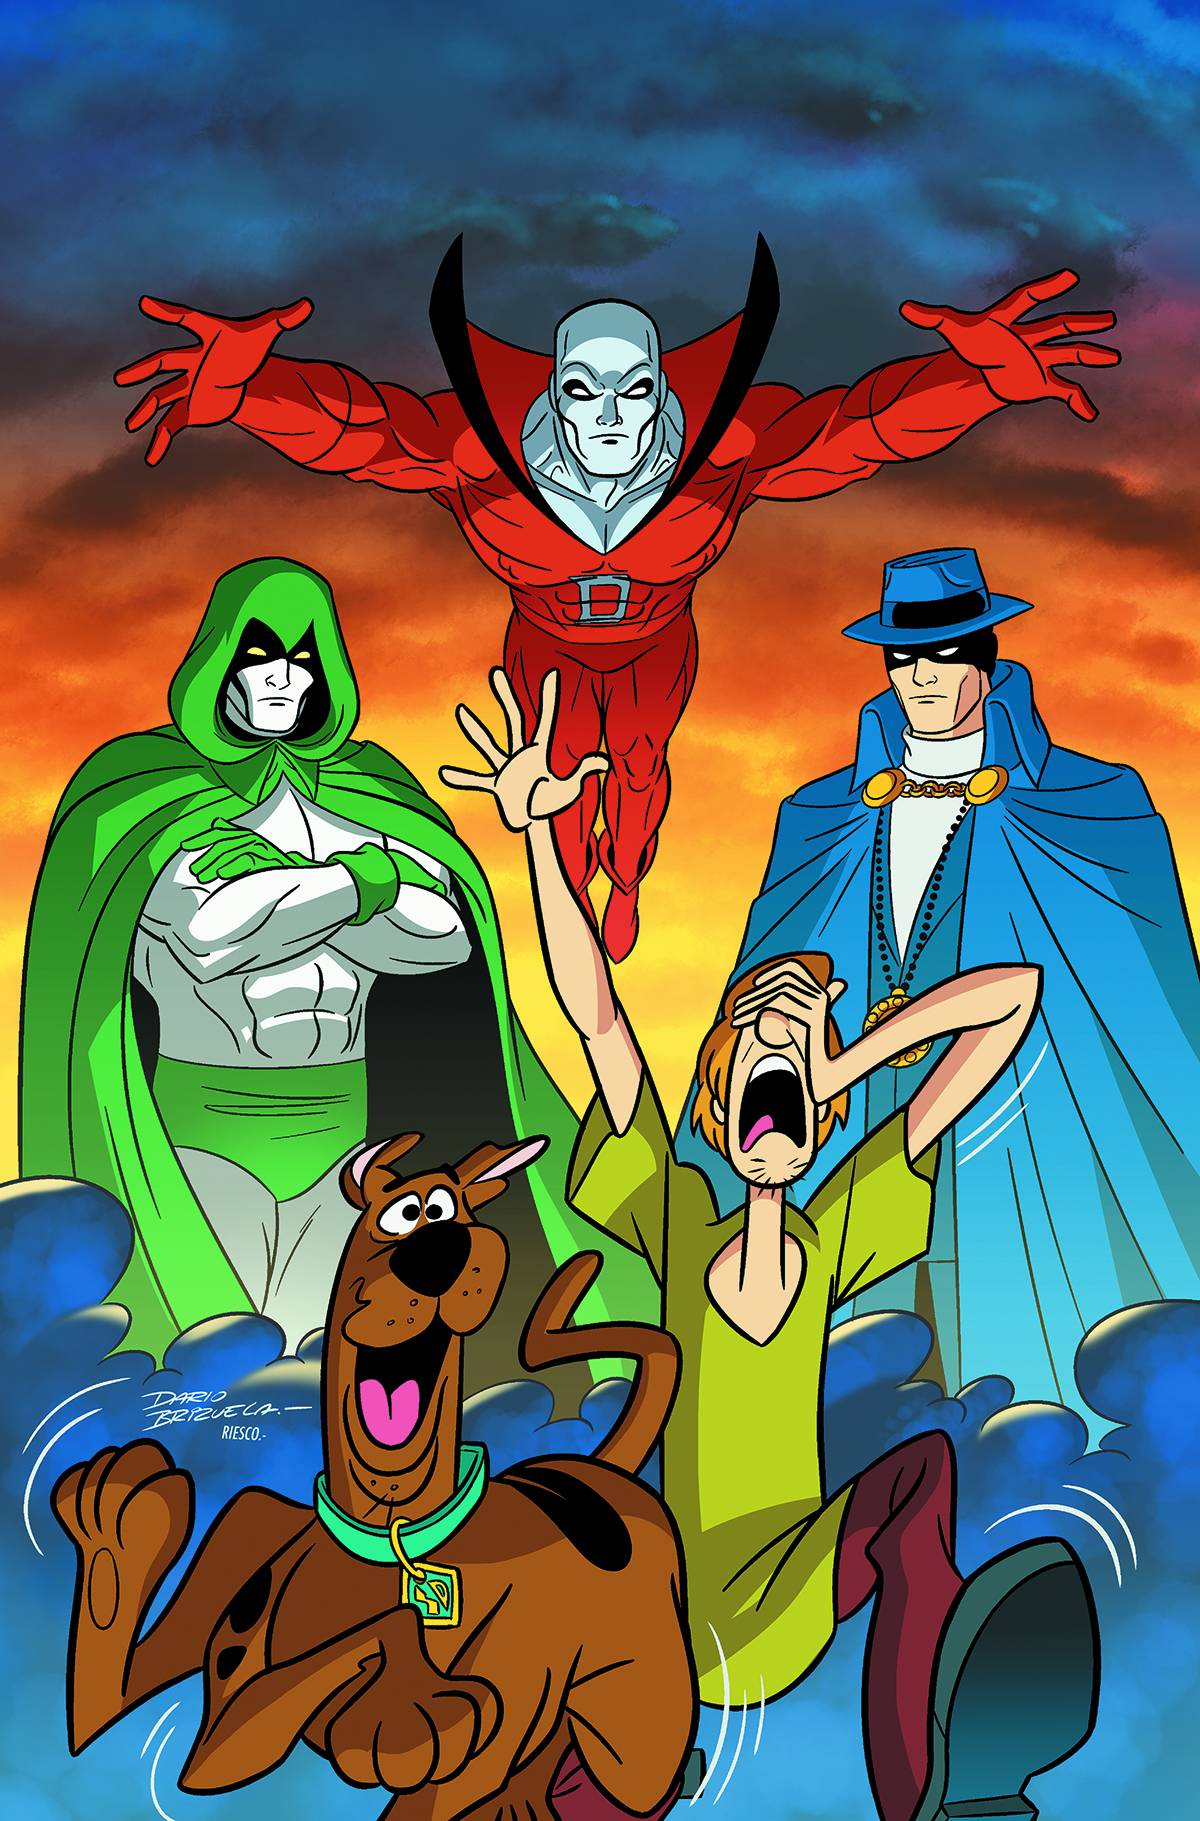 Scooby doo comics